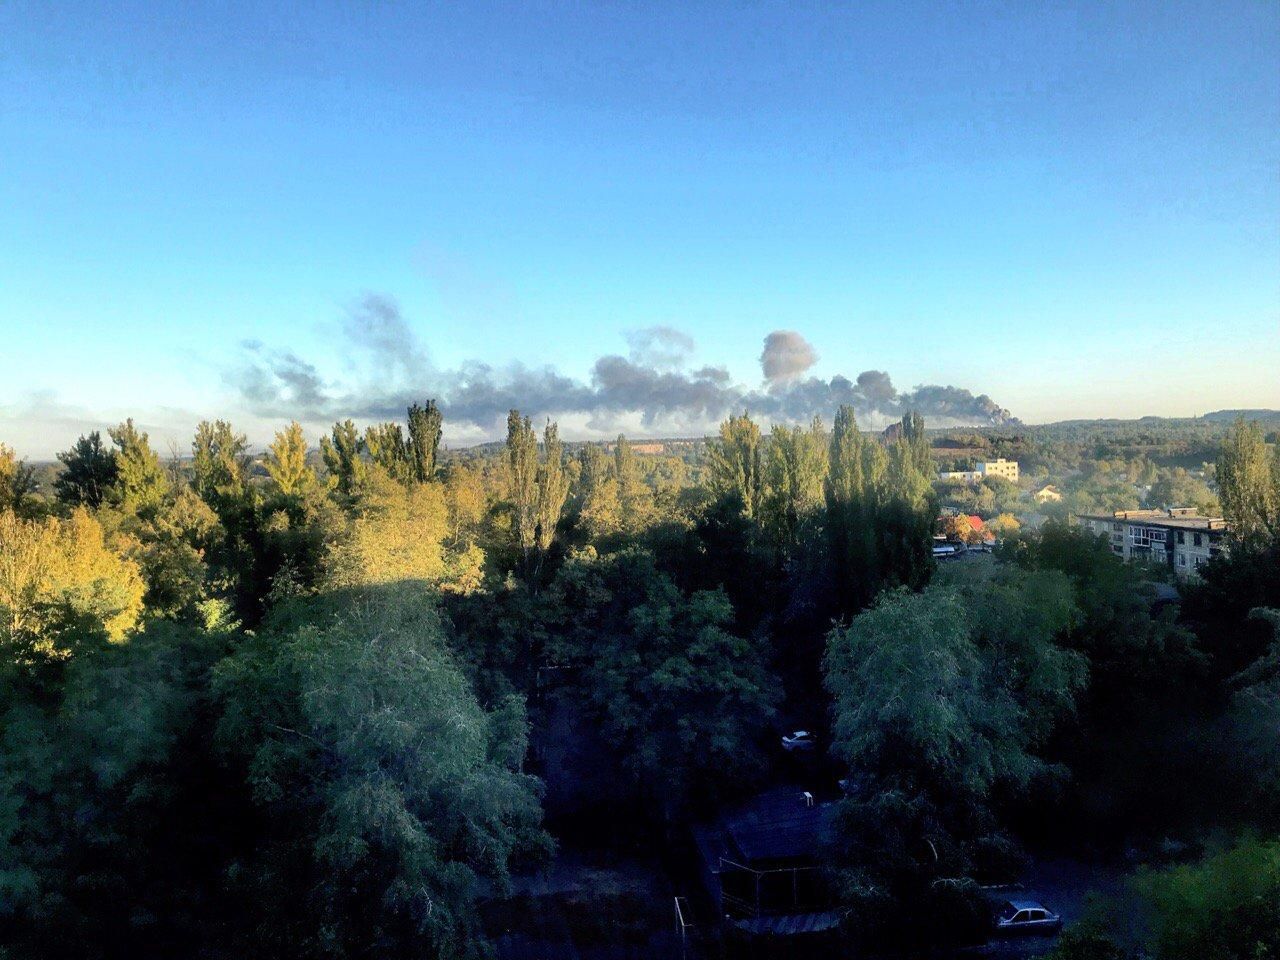 Пожар в Донецке 25.09.2019 – видео пожара склада с боеприпасами